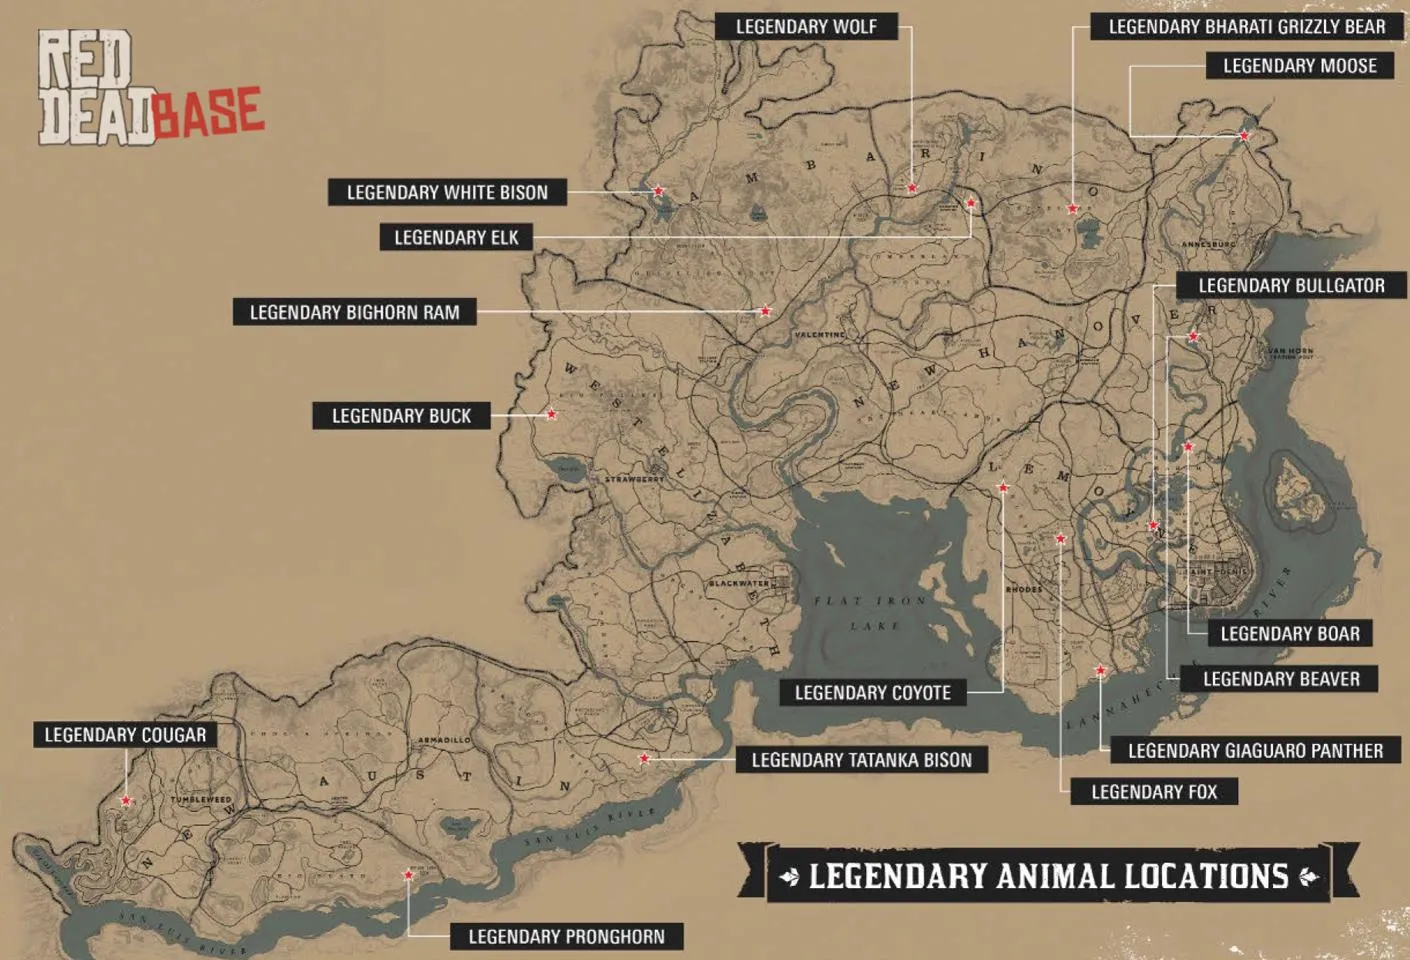 Legendary Tatanka Bison - Map Location in RDR2